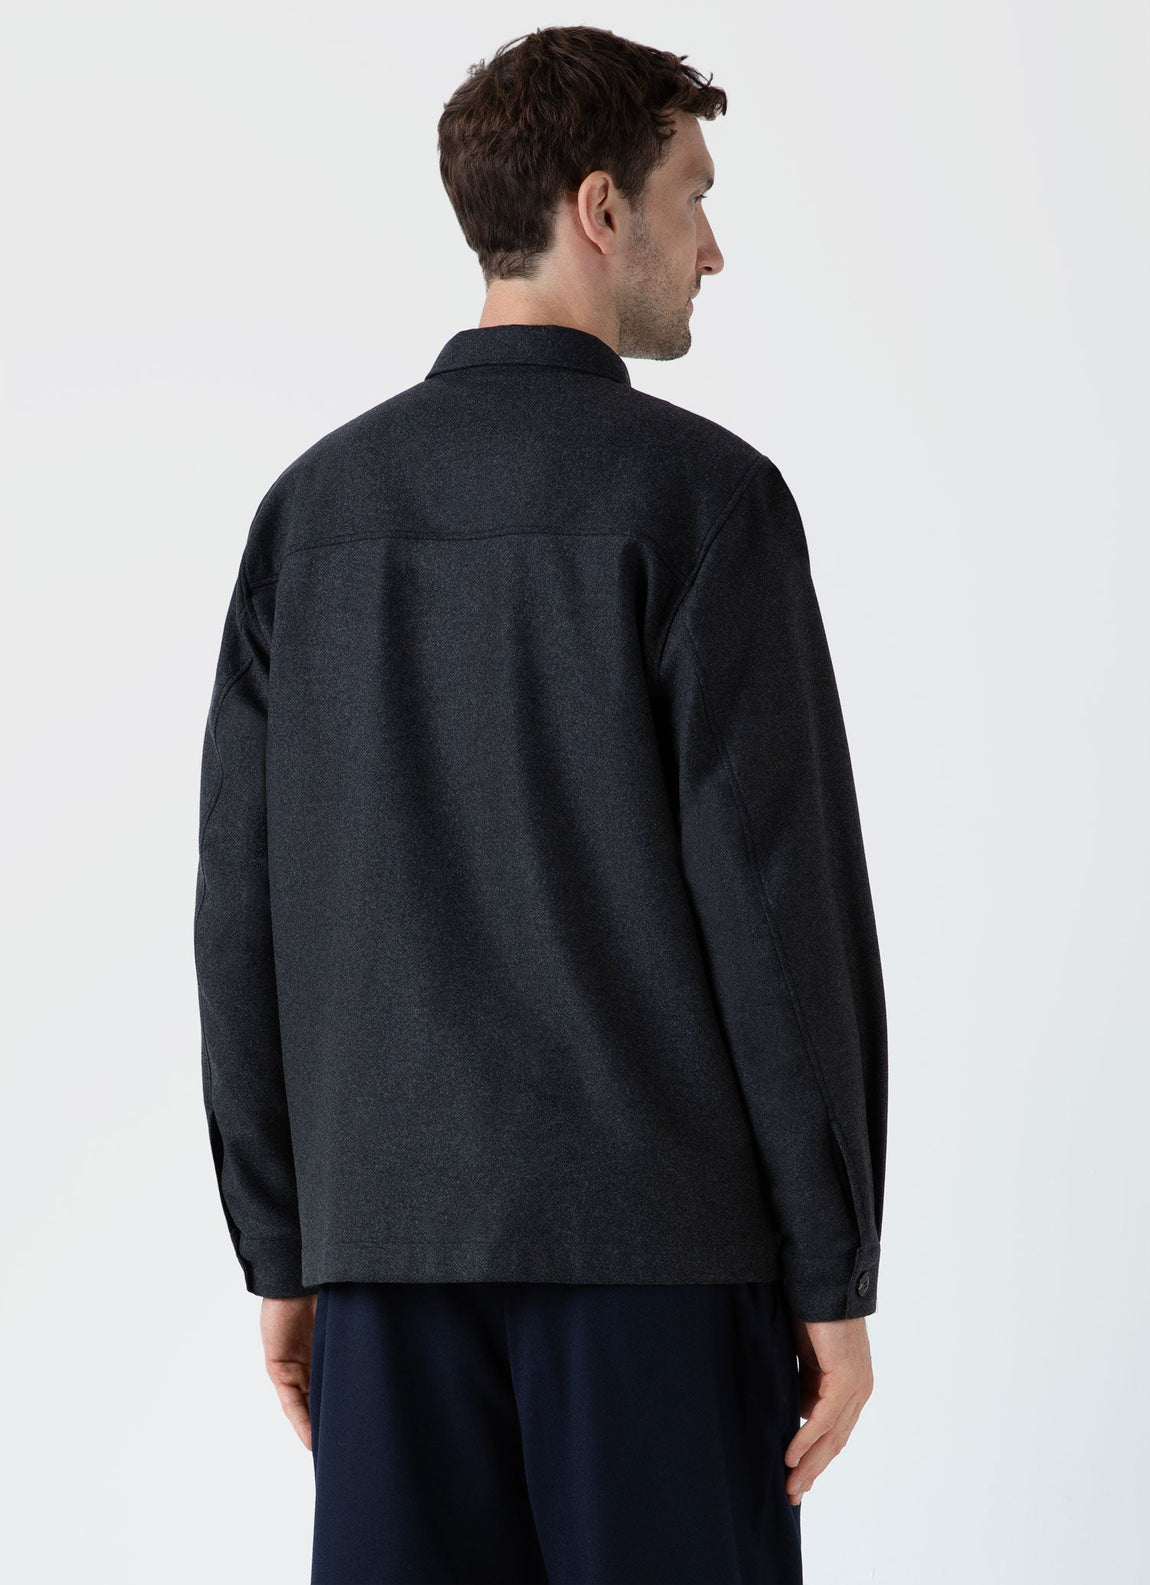 Men's Wool Twill Overshirt in Charcoal Melange